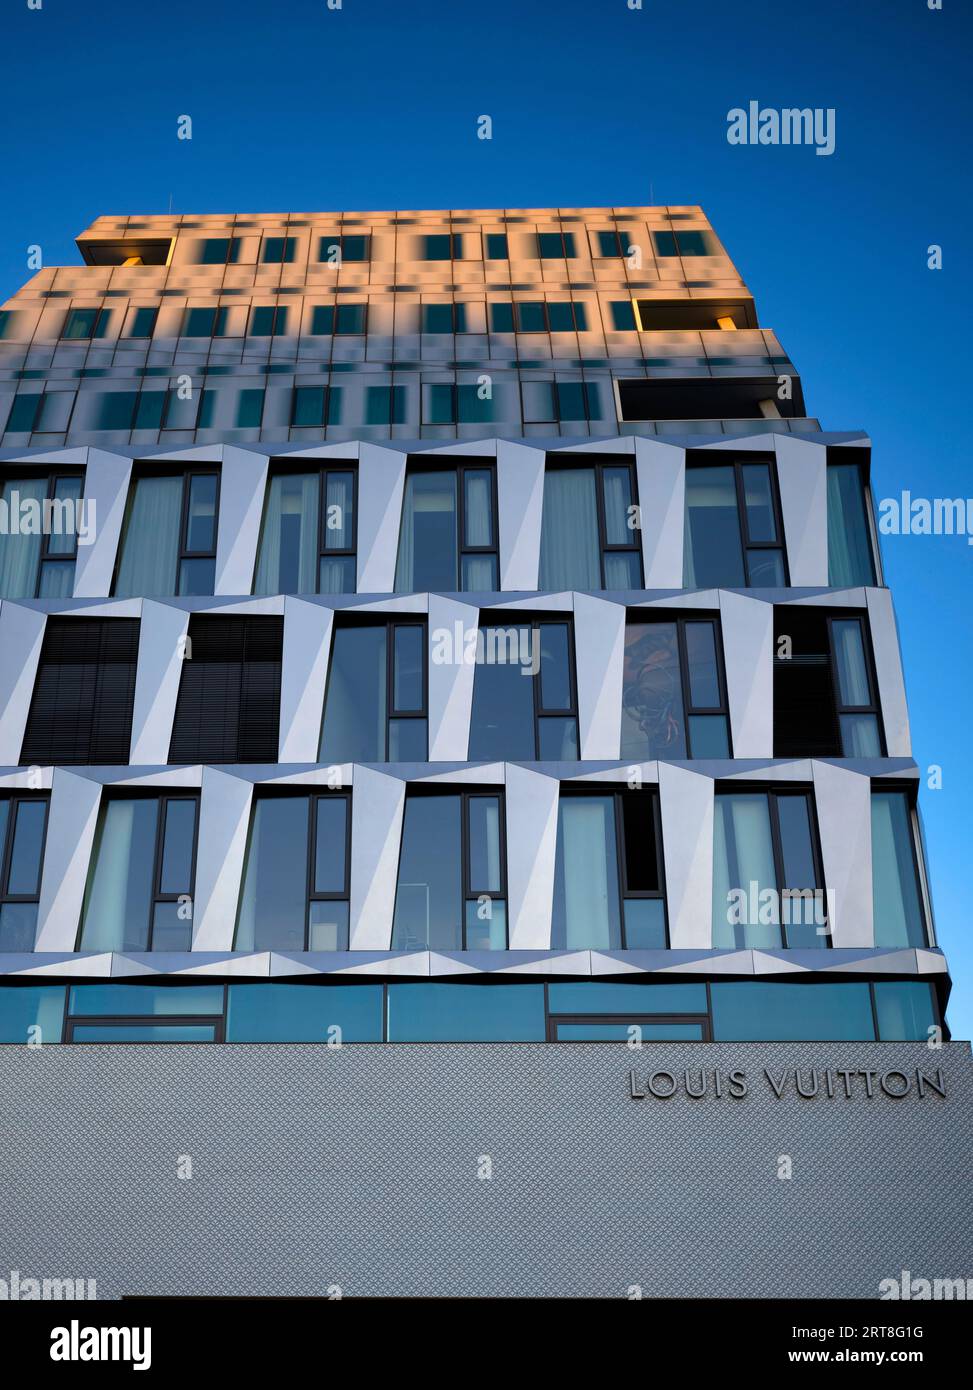 Louis Vuitton Stuttgart store, Germany